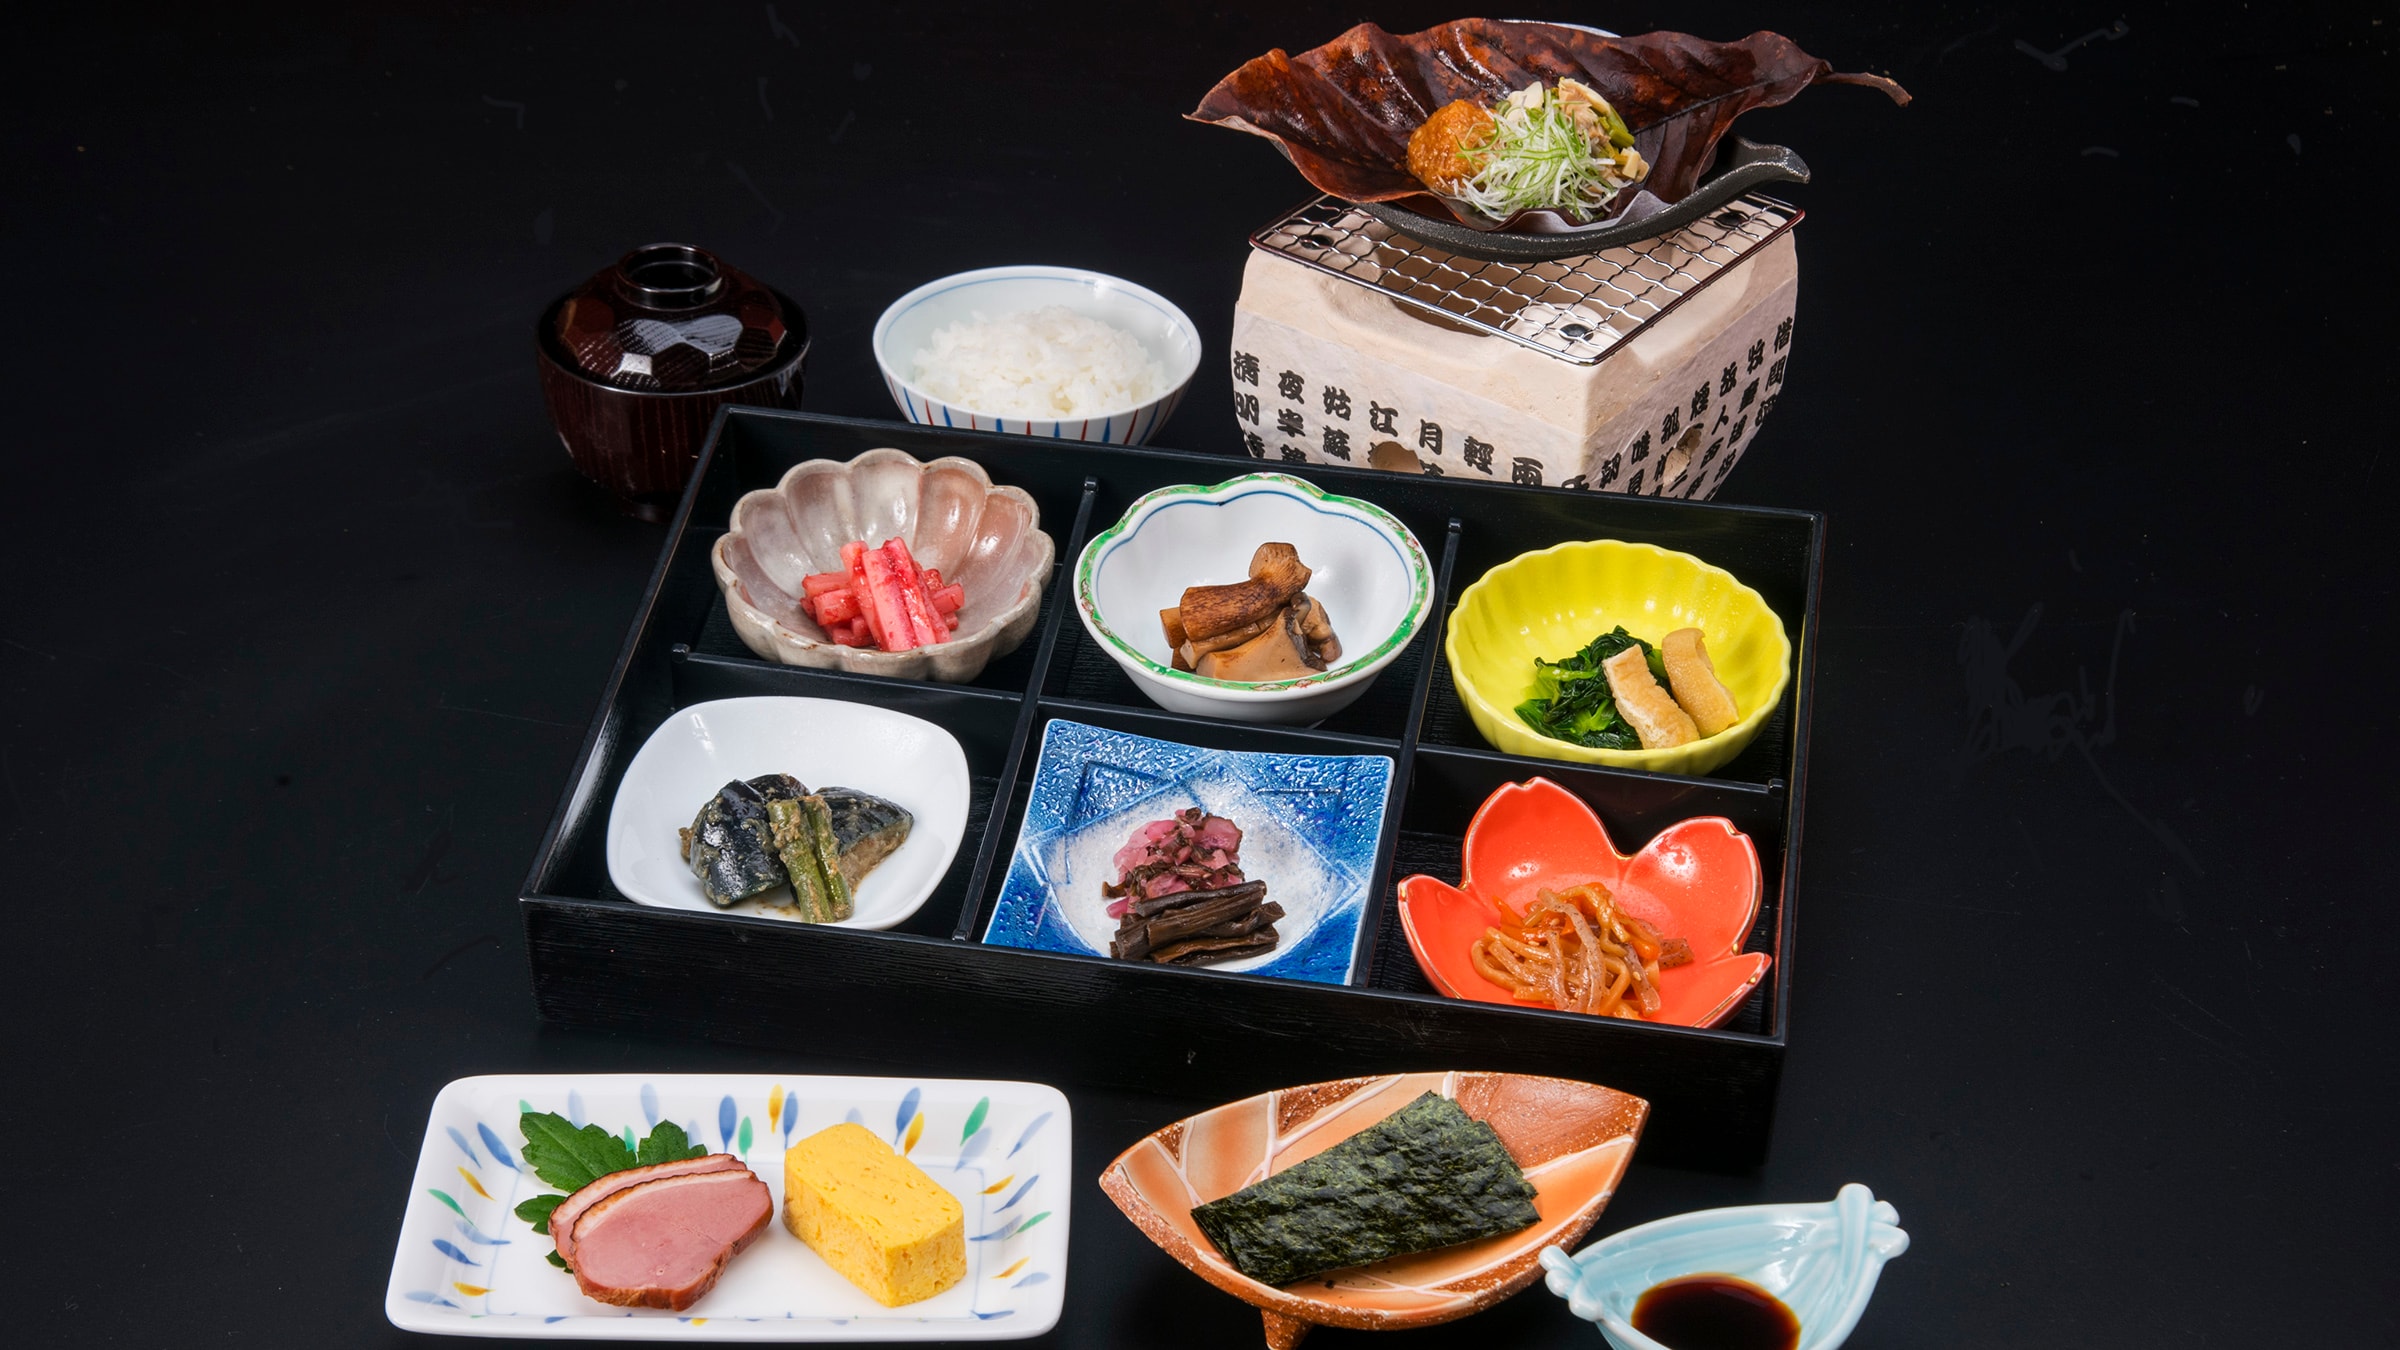 ◆ Meal: Japanese breakfast set